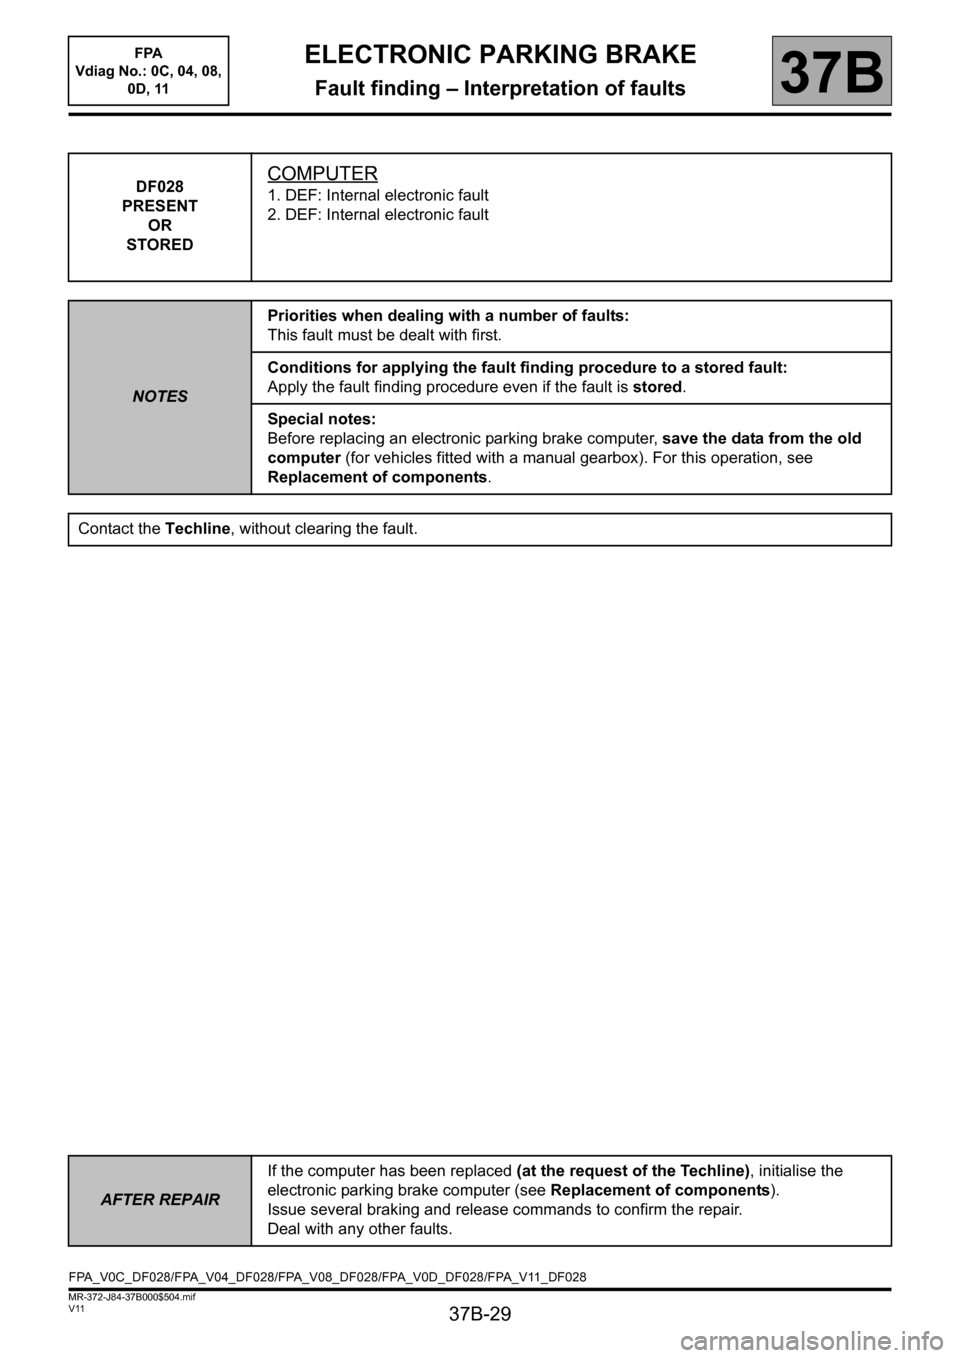 RENAULT SCENIC 2013 J95 / 3.G Electronic Parking Brake Owners Manual 37B-29
MR-372-J84-37B000$504.mif
V11
ELECTRONIC PARKING BRAKE
Fault finding – Interpretation of faults
FPA  
Vdiag No.: 0C, 04, 08, 
0D, 11
37B
DF028
PRESENT
OR
STOREDCOMPUTER
1. DEF: Internal elect